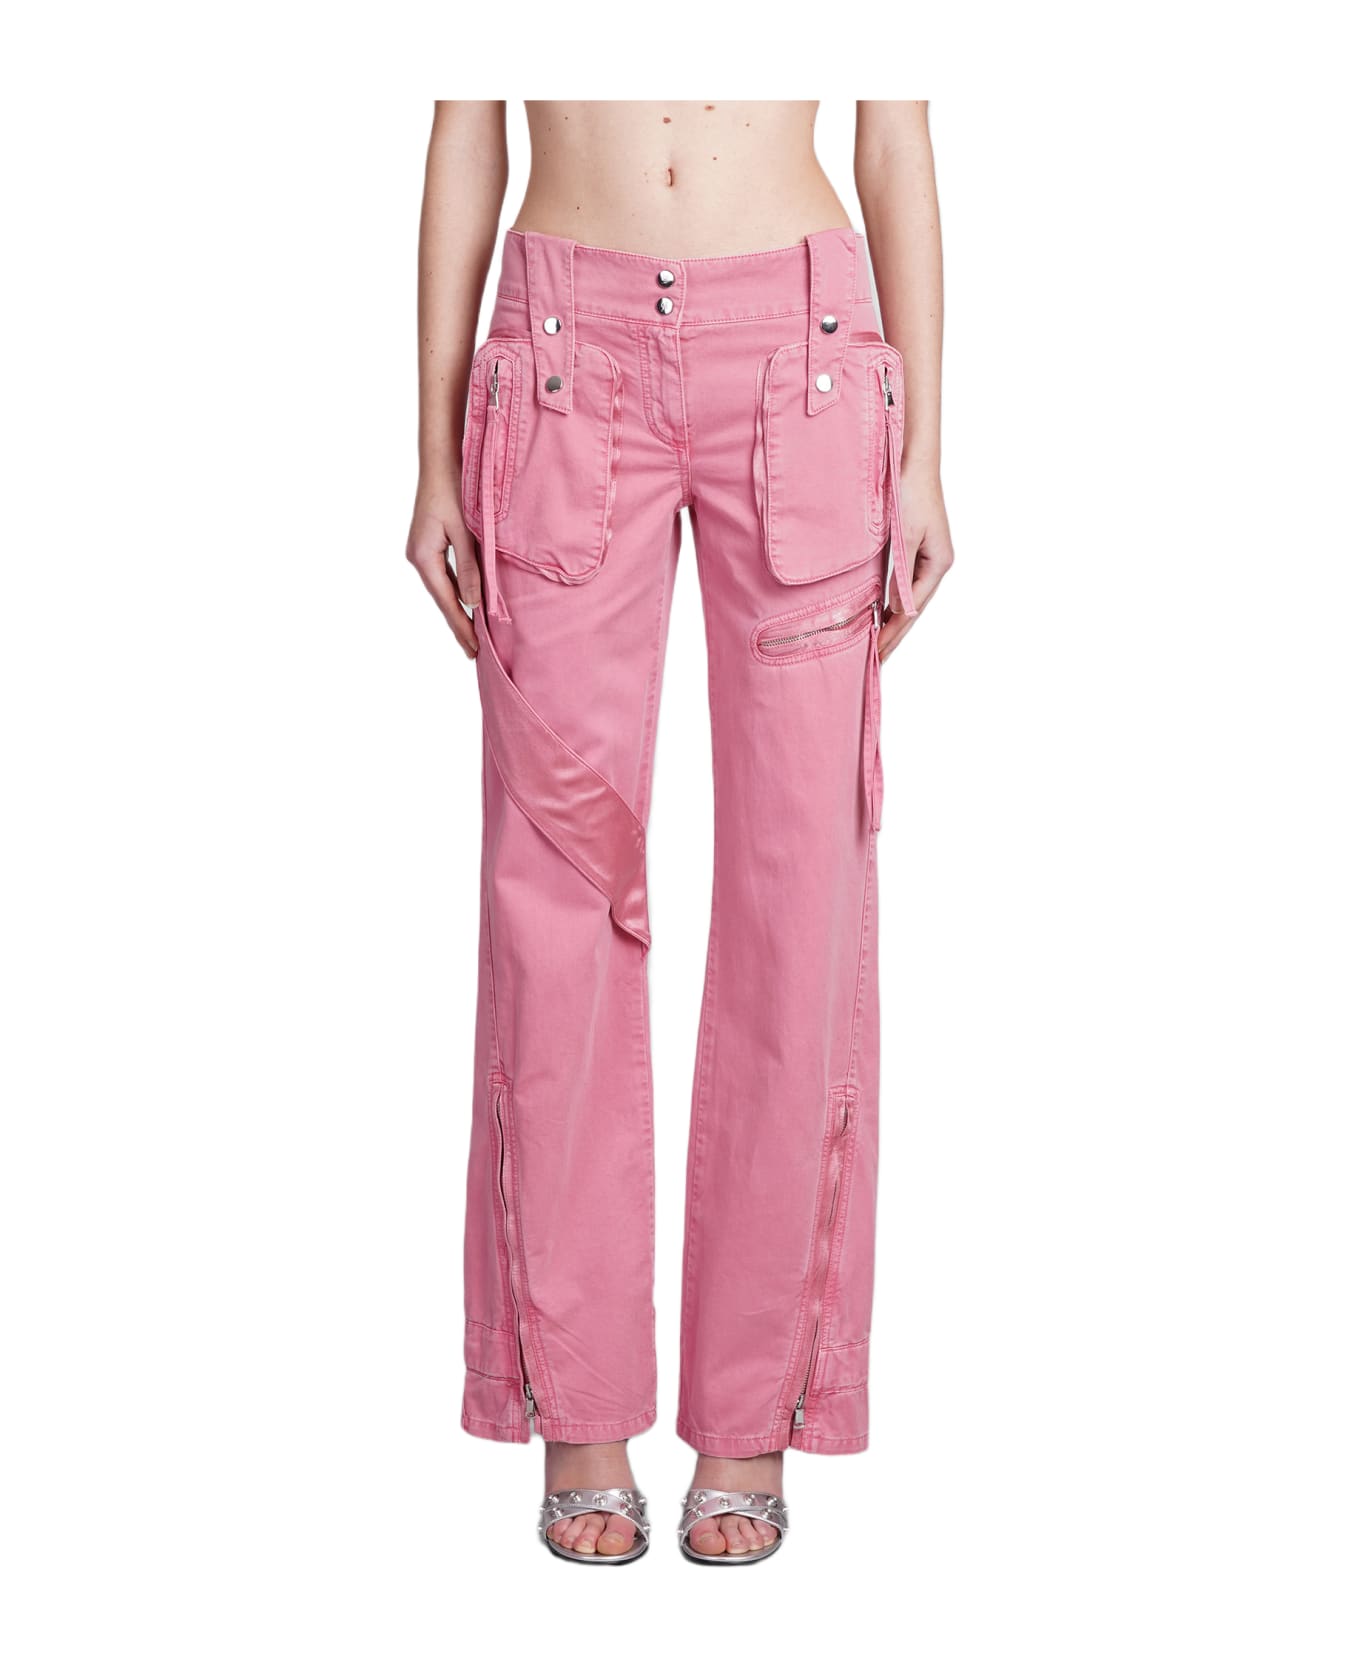 Blumarine Jeans In Rose-pink Cotton - rose-pink